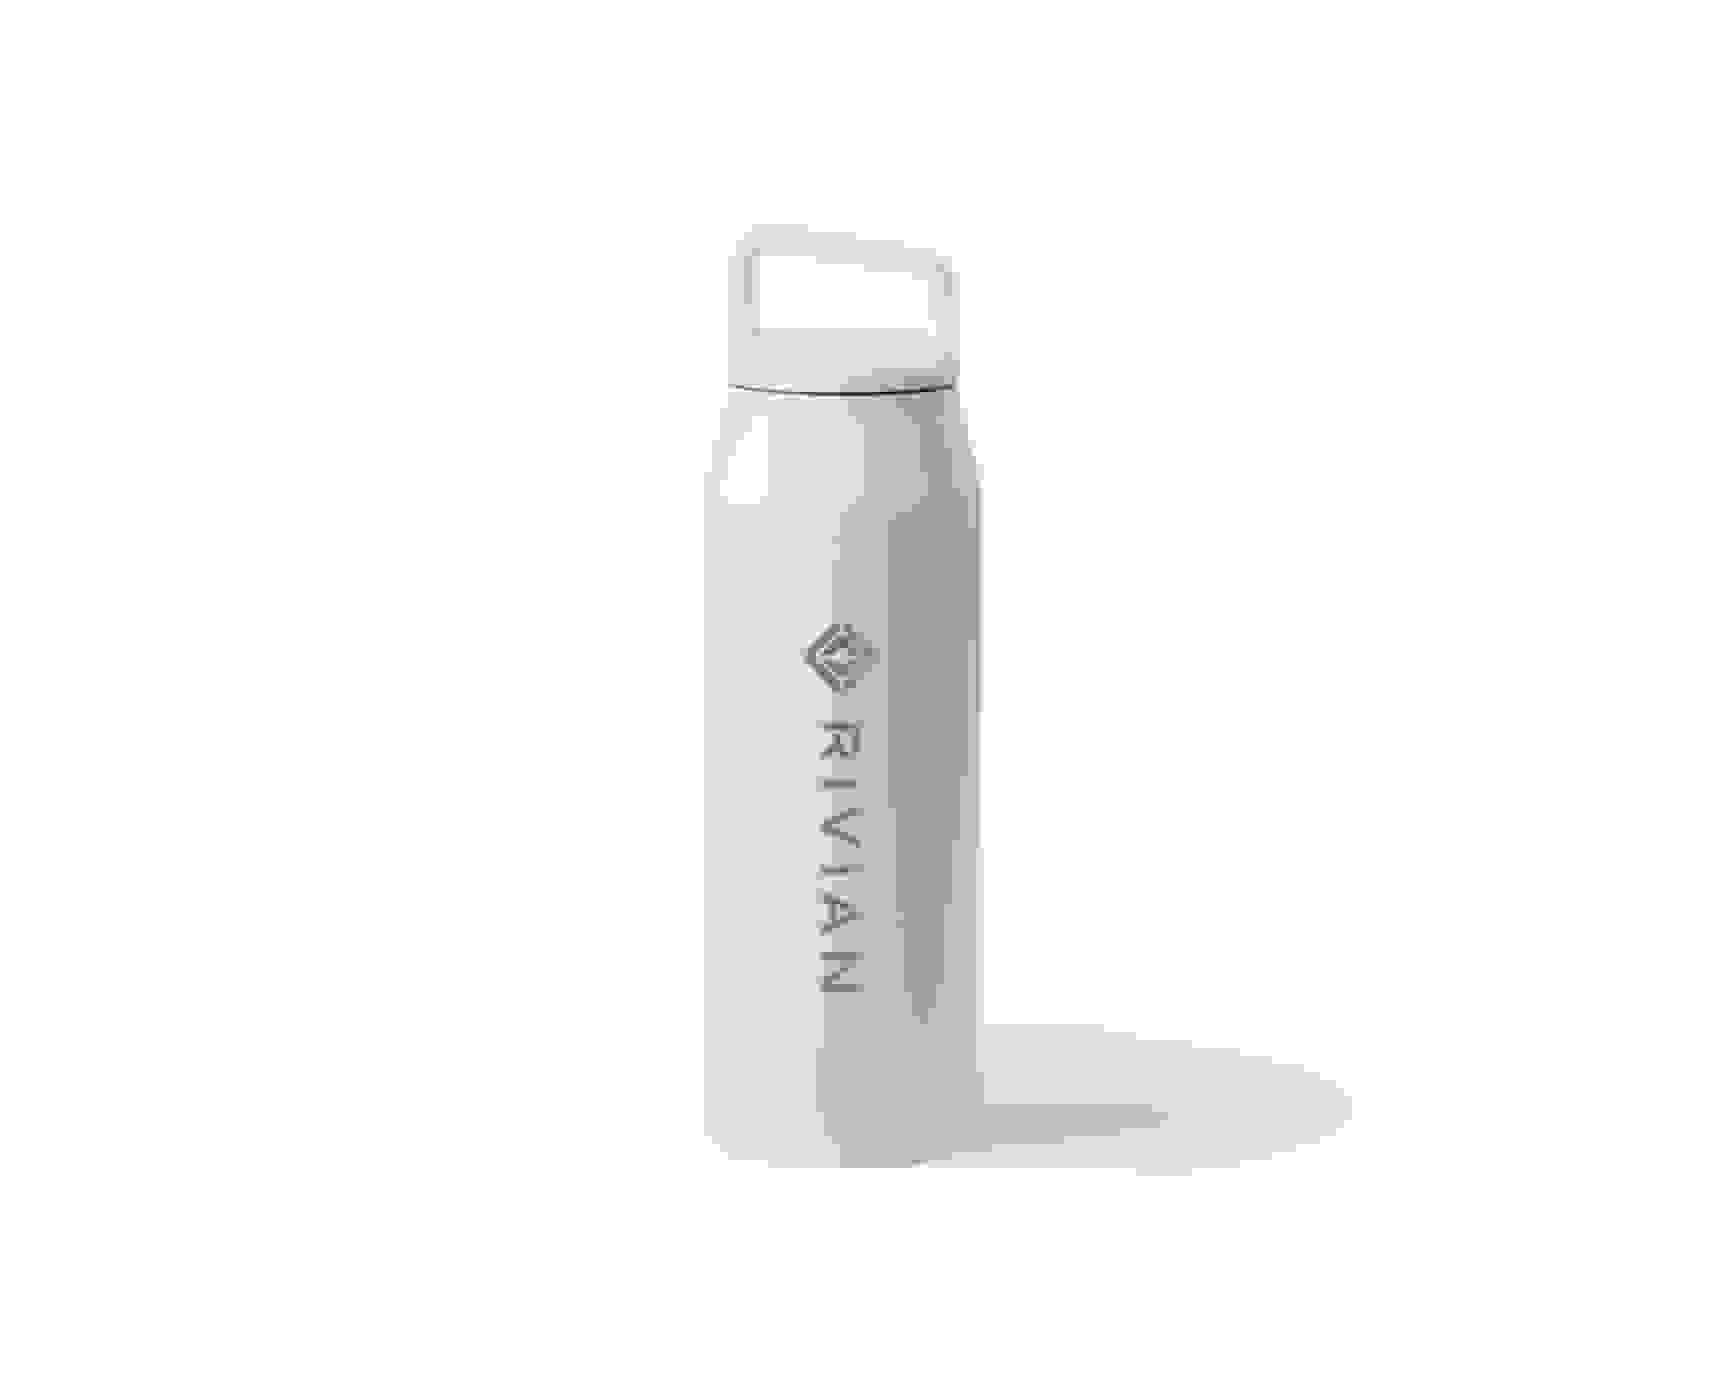 https://media.rivian.com/rivian-main/image/upload/f_auto,q_1/v1/rivian-com/gearshop/32%20oz%20Wide%20Mouth%20Bottle/White/32-oz-Wide-Mouth-Bottle-White-Primary-01_l7al4o